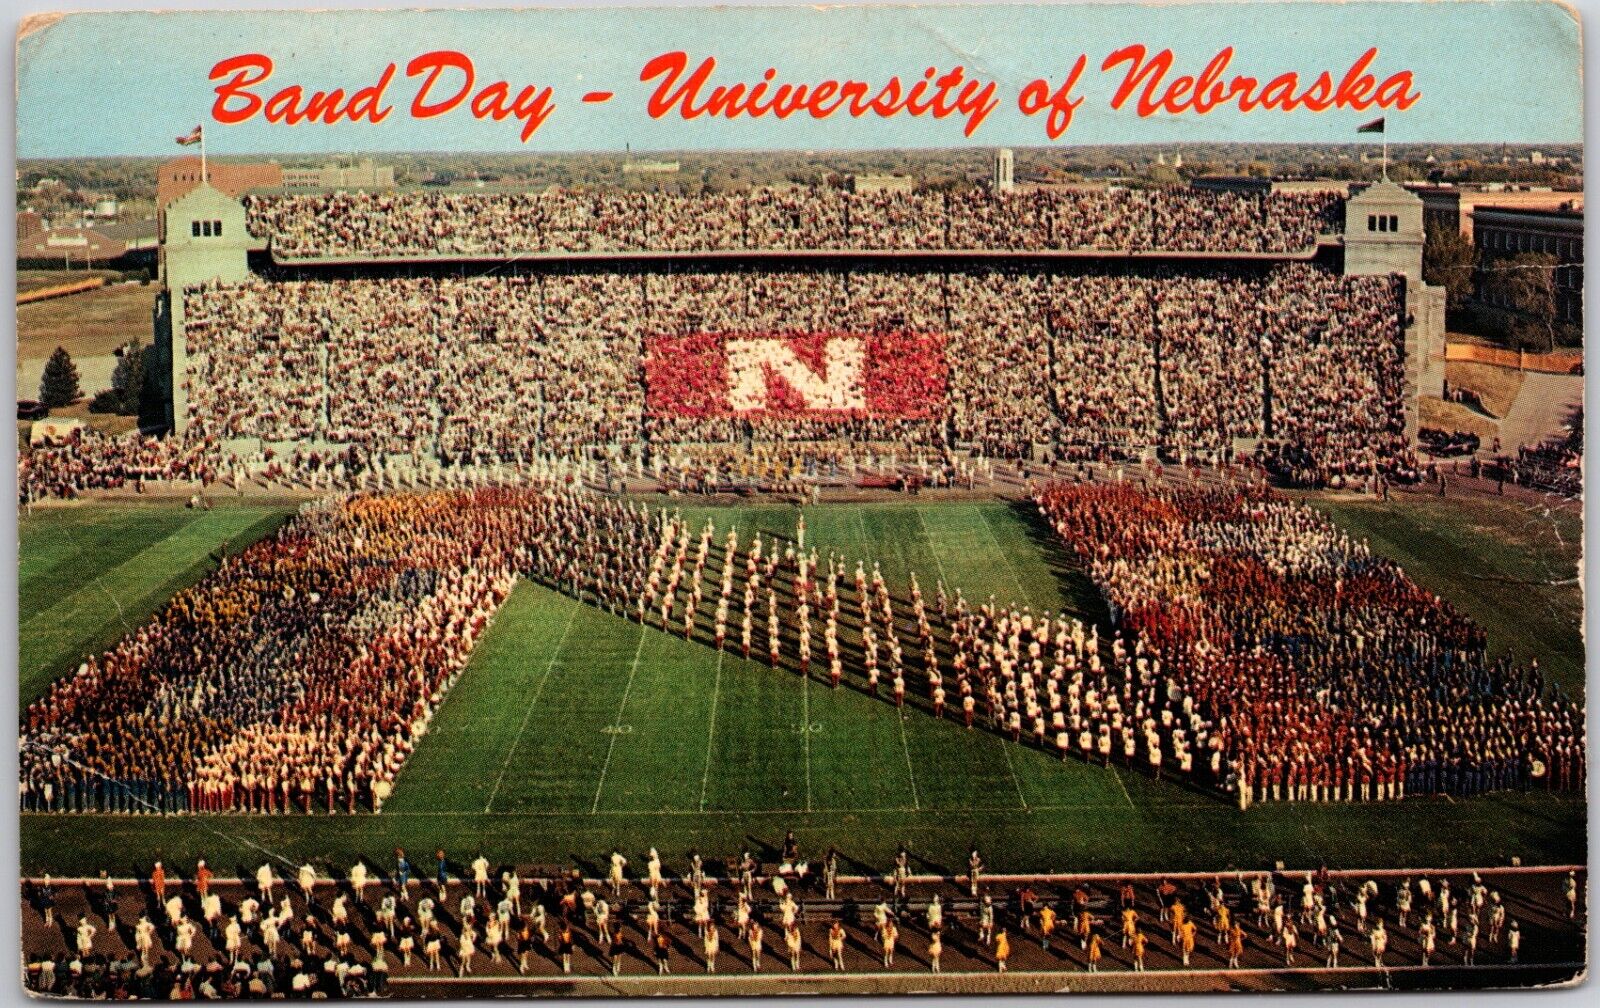 University Of Nebraska Band Day Chrome Postcard 